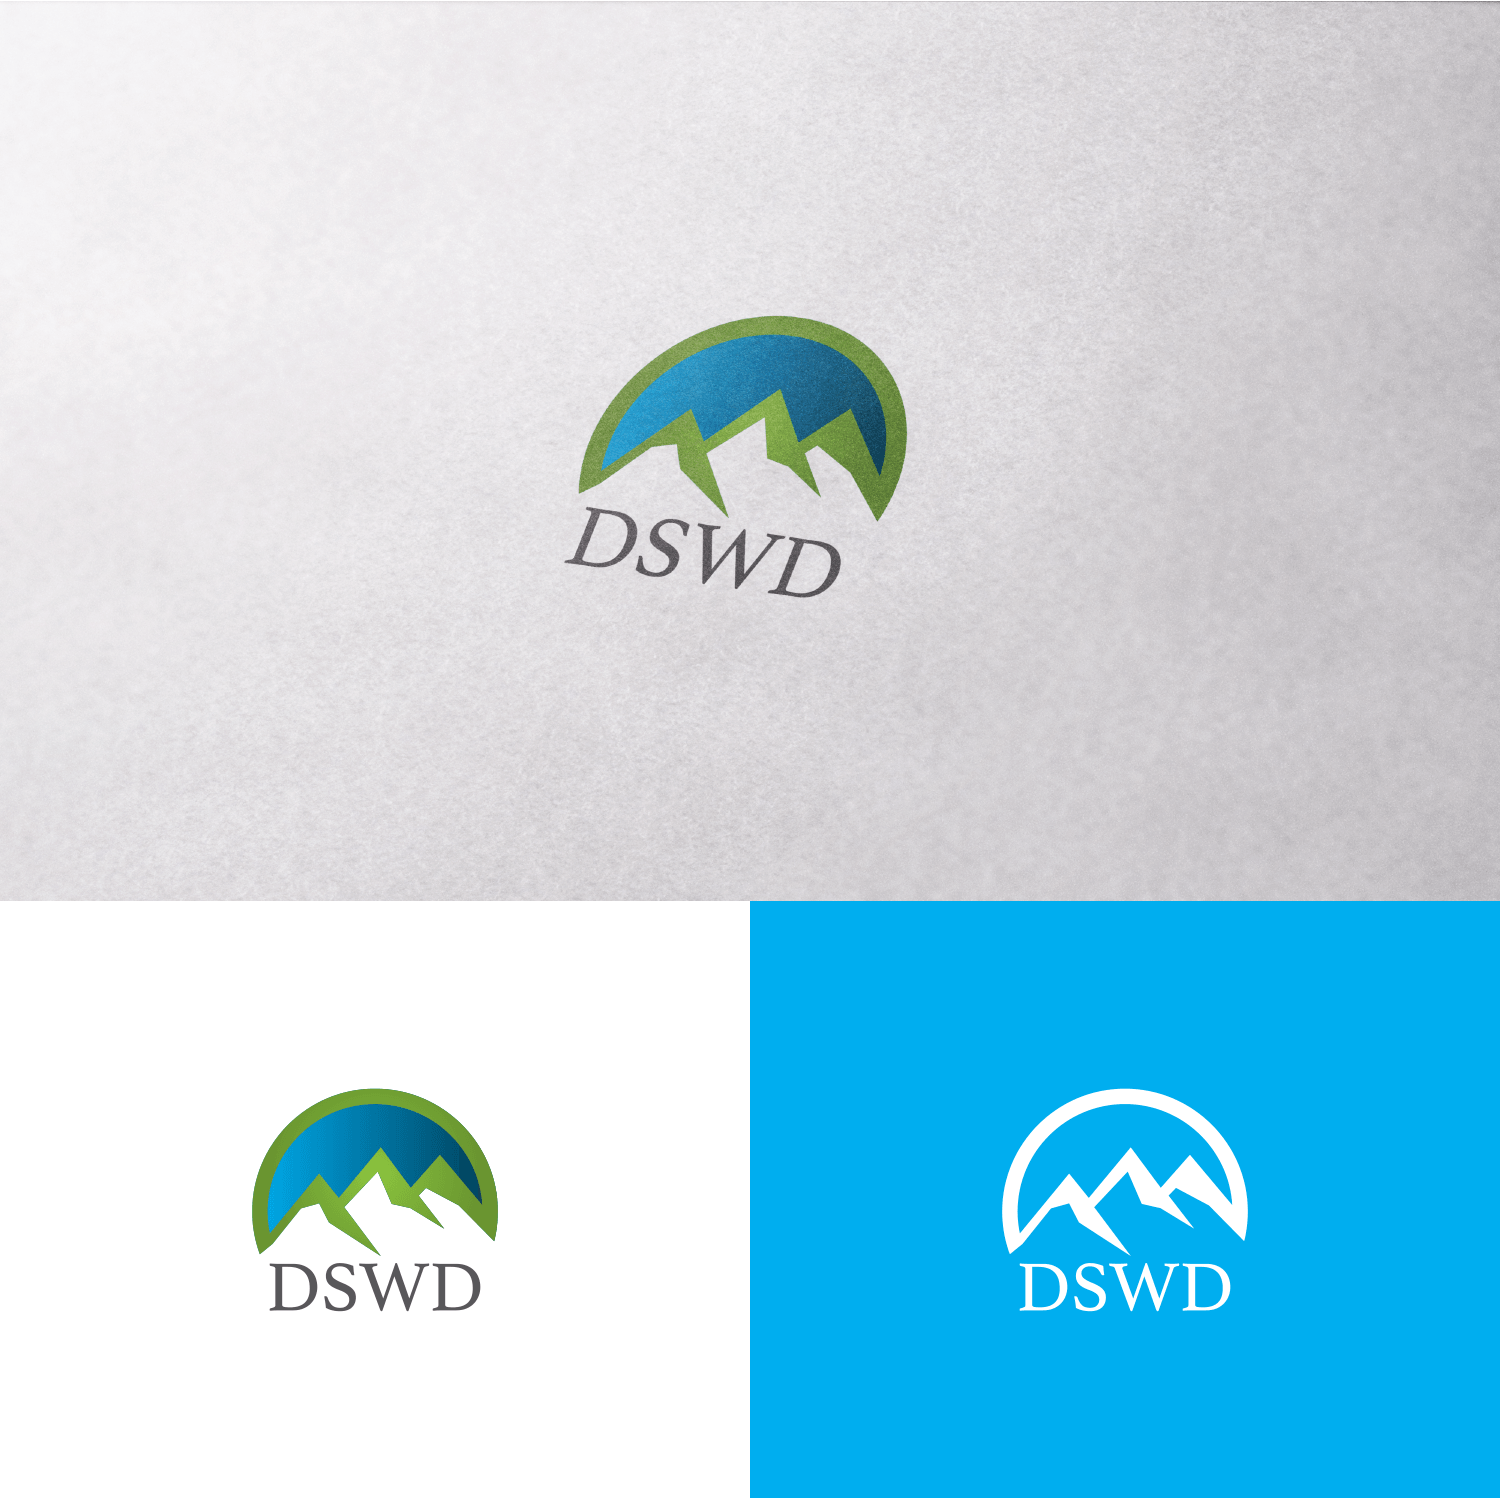 Modern Water Logo - Serious, Modern, Water Company Logo Design for DWSD or Dominion